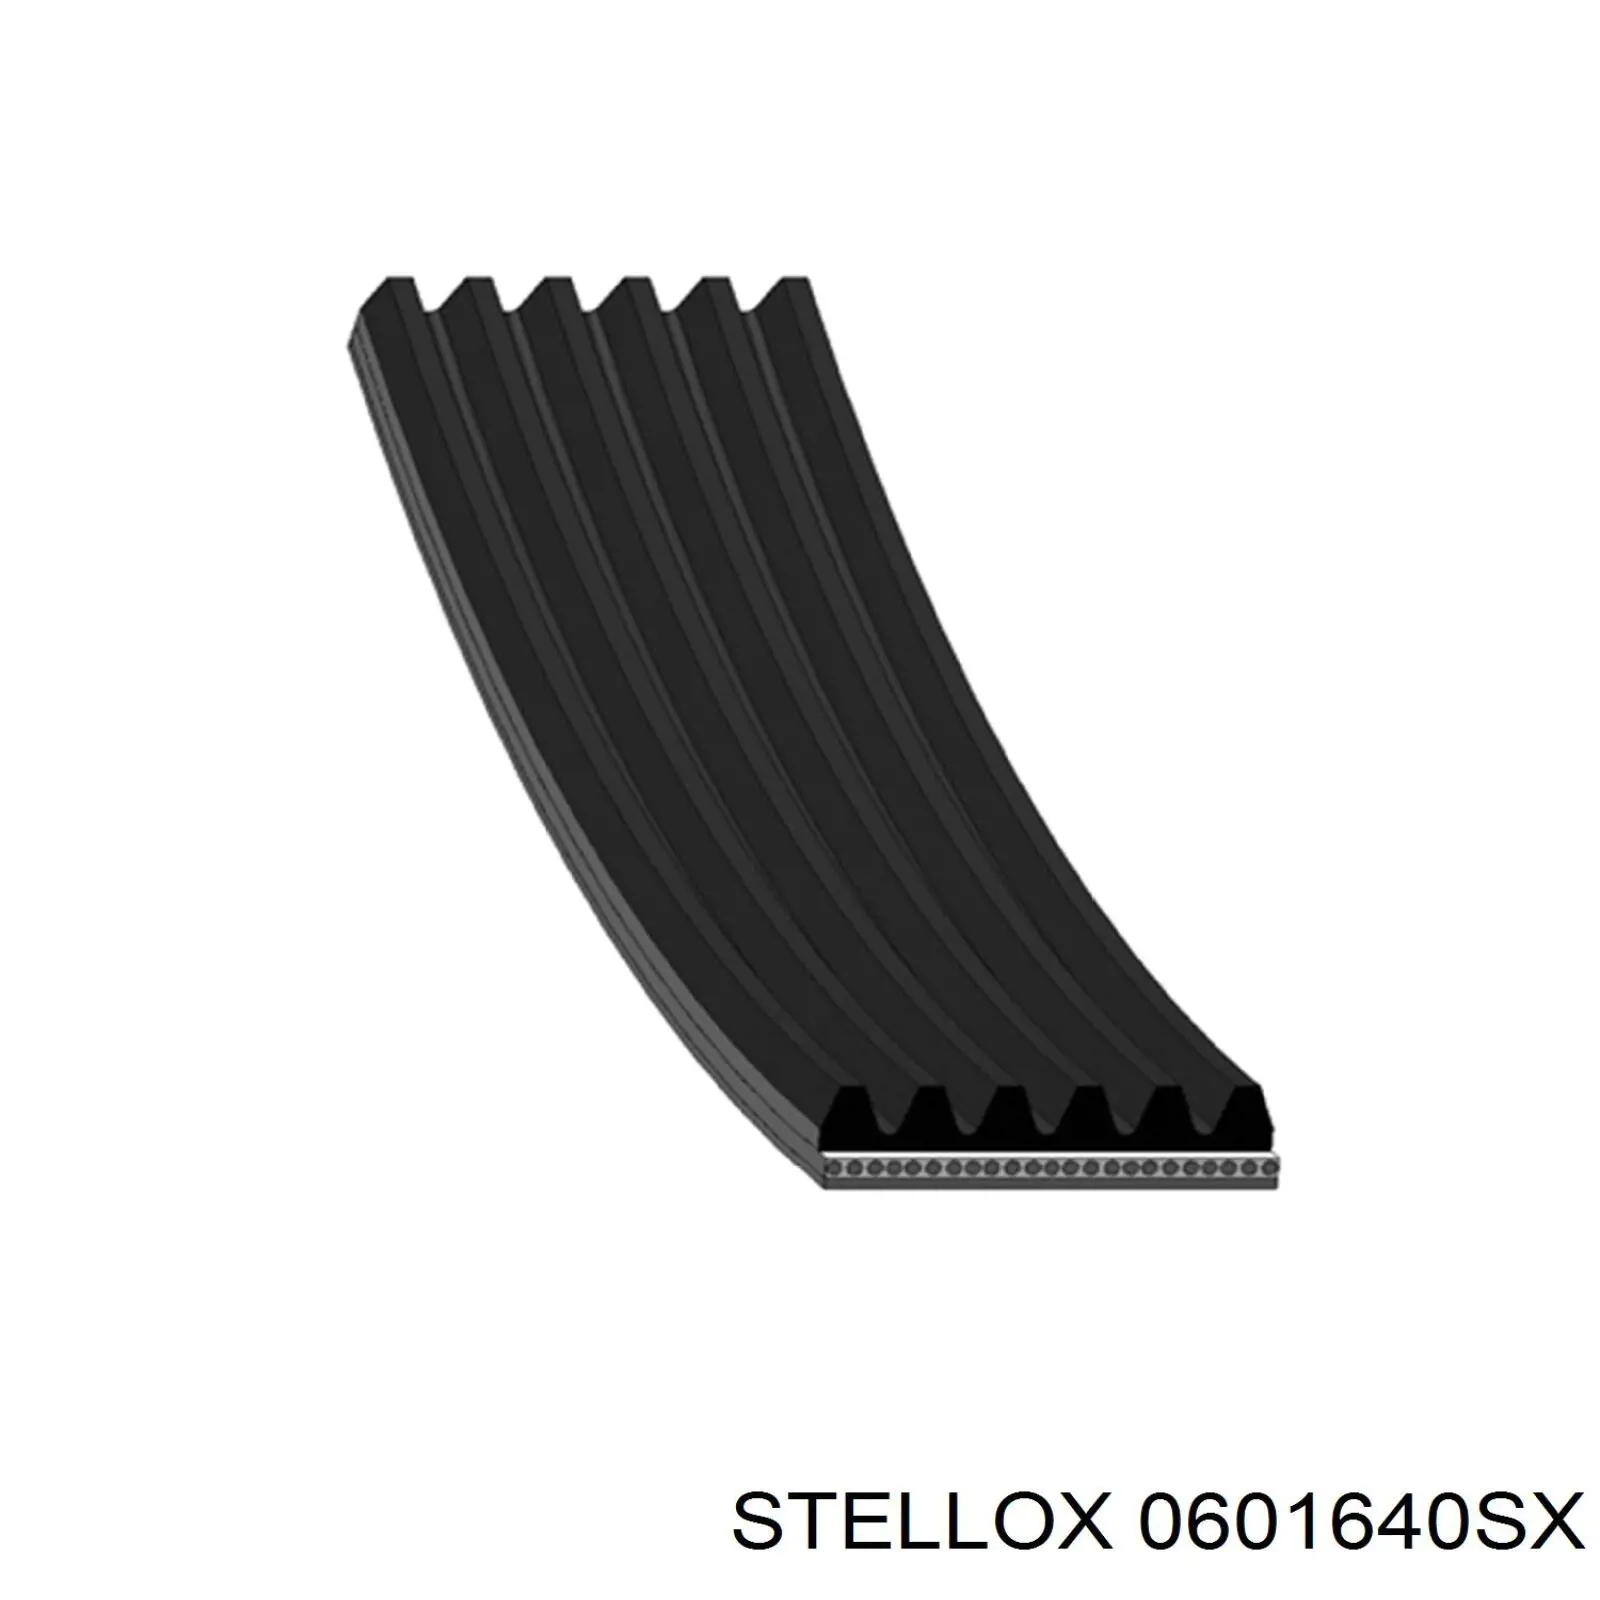 06-01640-SX Stellox correa trapezoidal